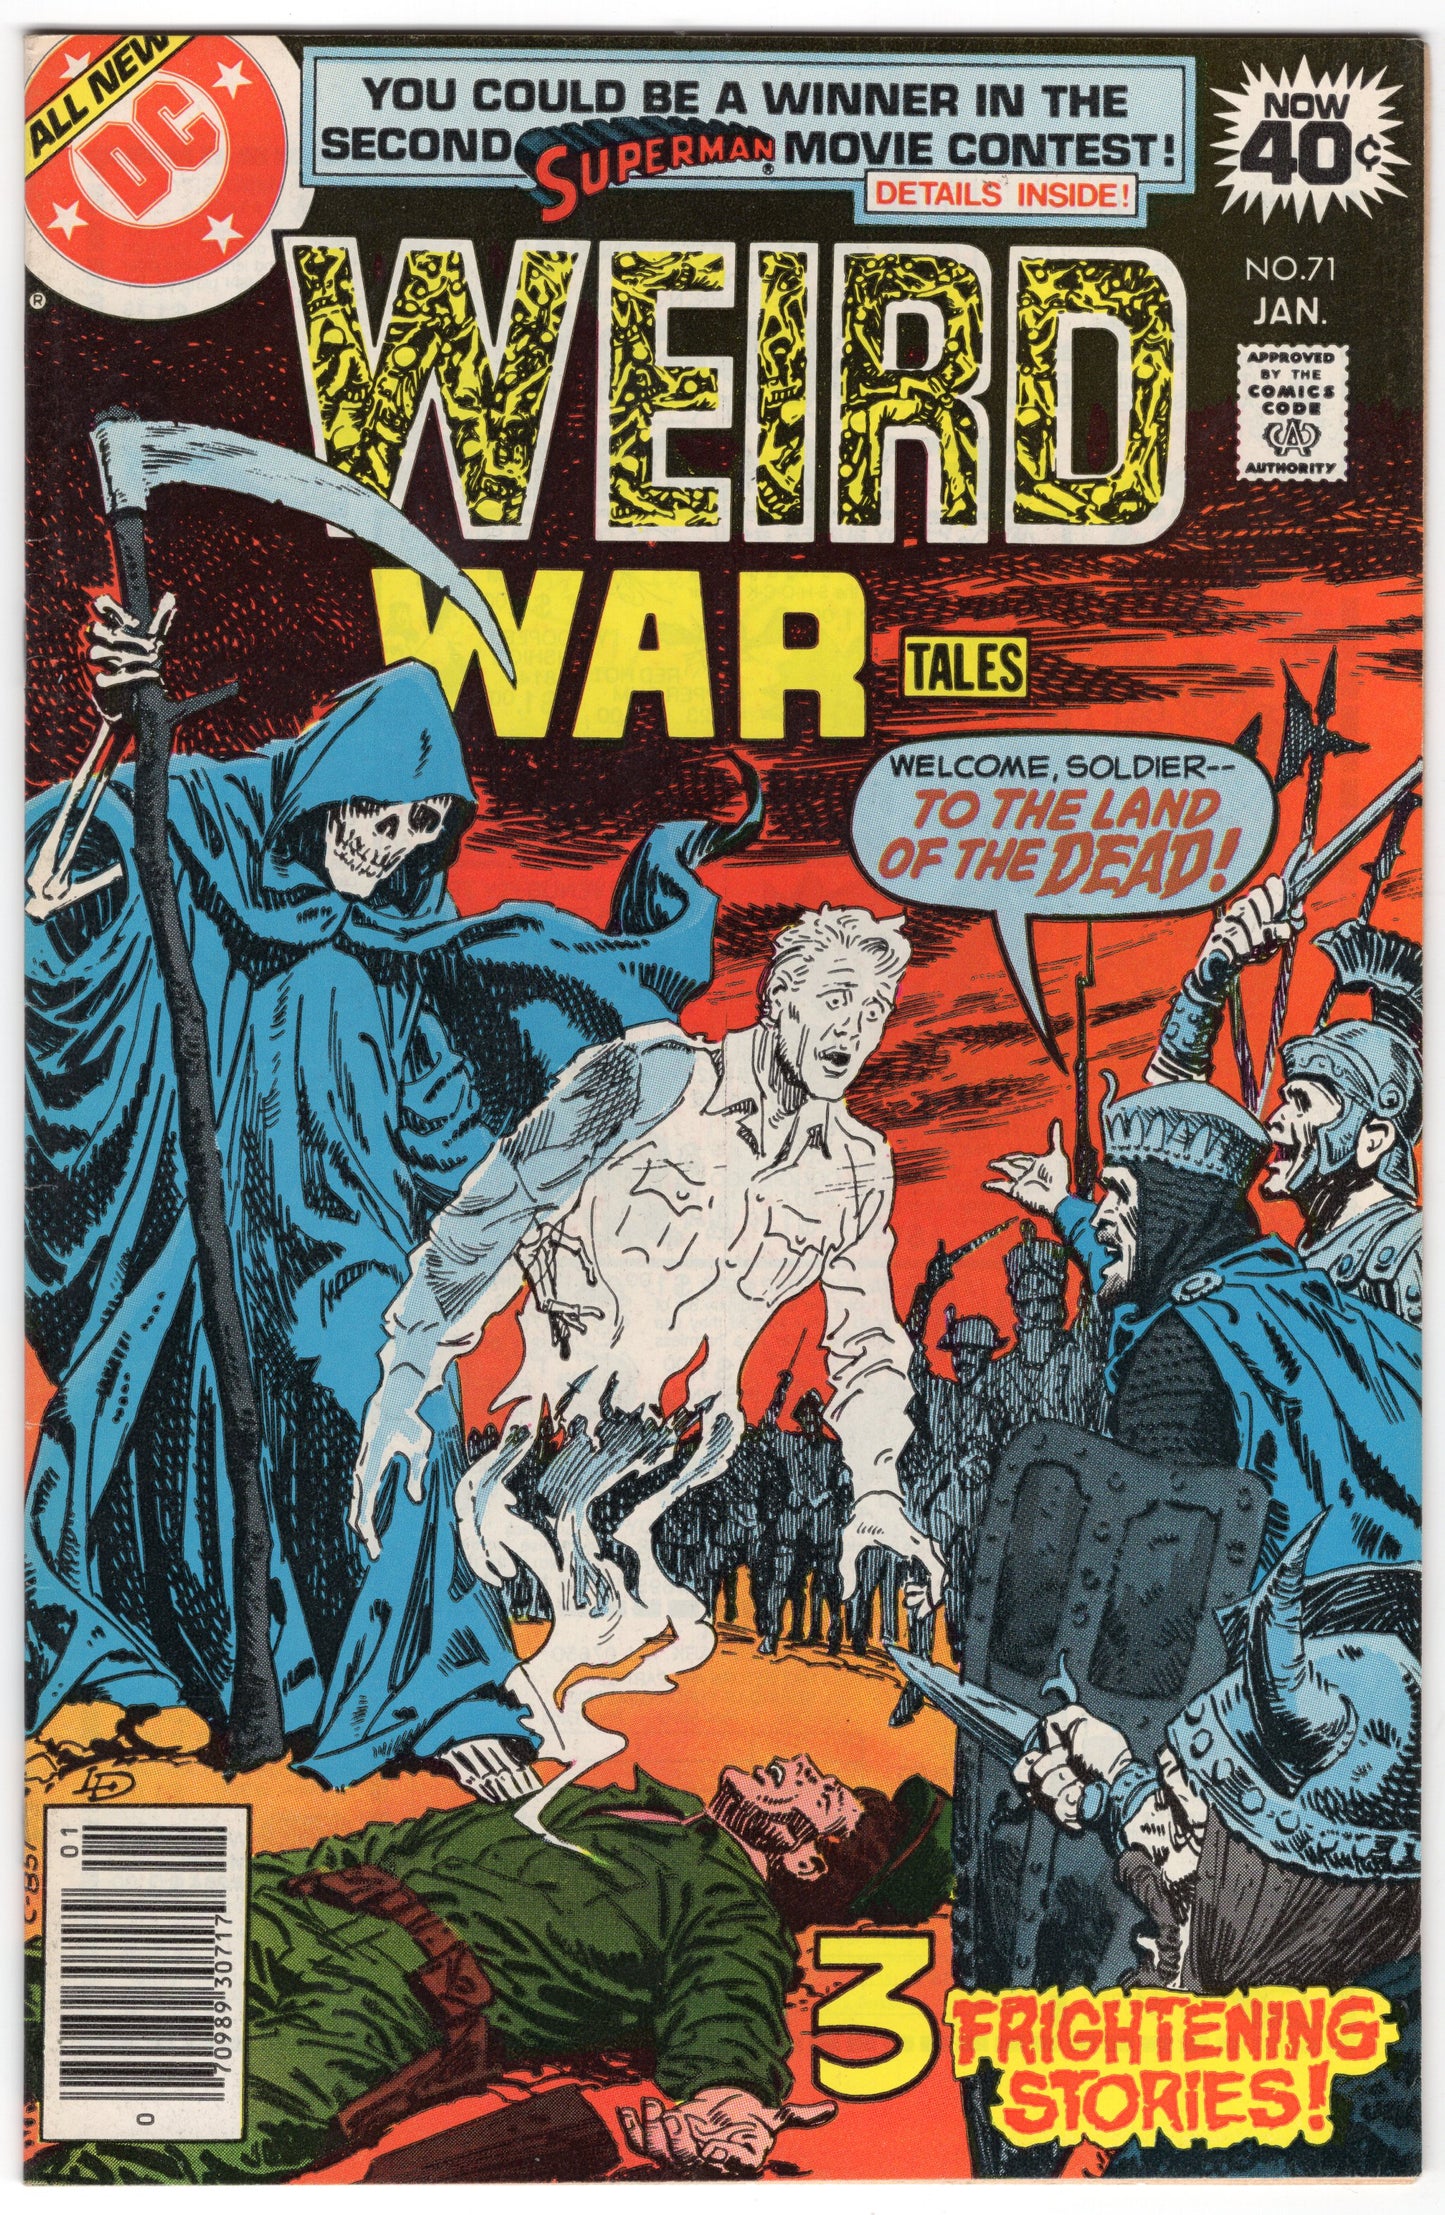 Weird War Tales "21 Days in Hell" - Issue #71 (Jan. 1979 - DC Comics) VF-